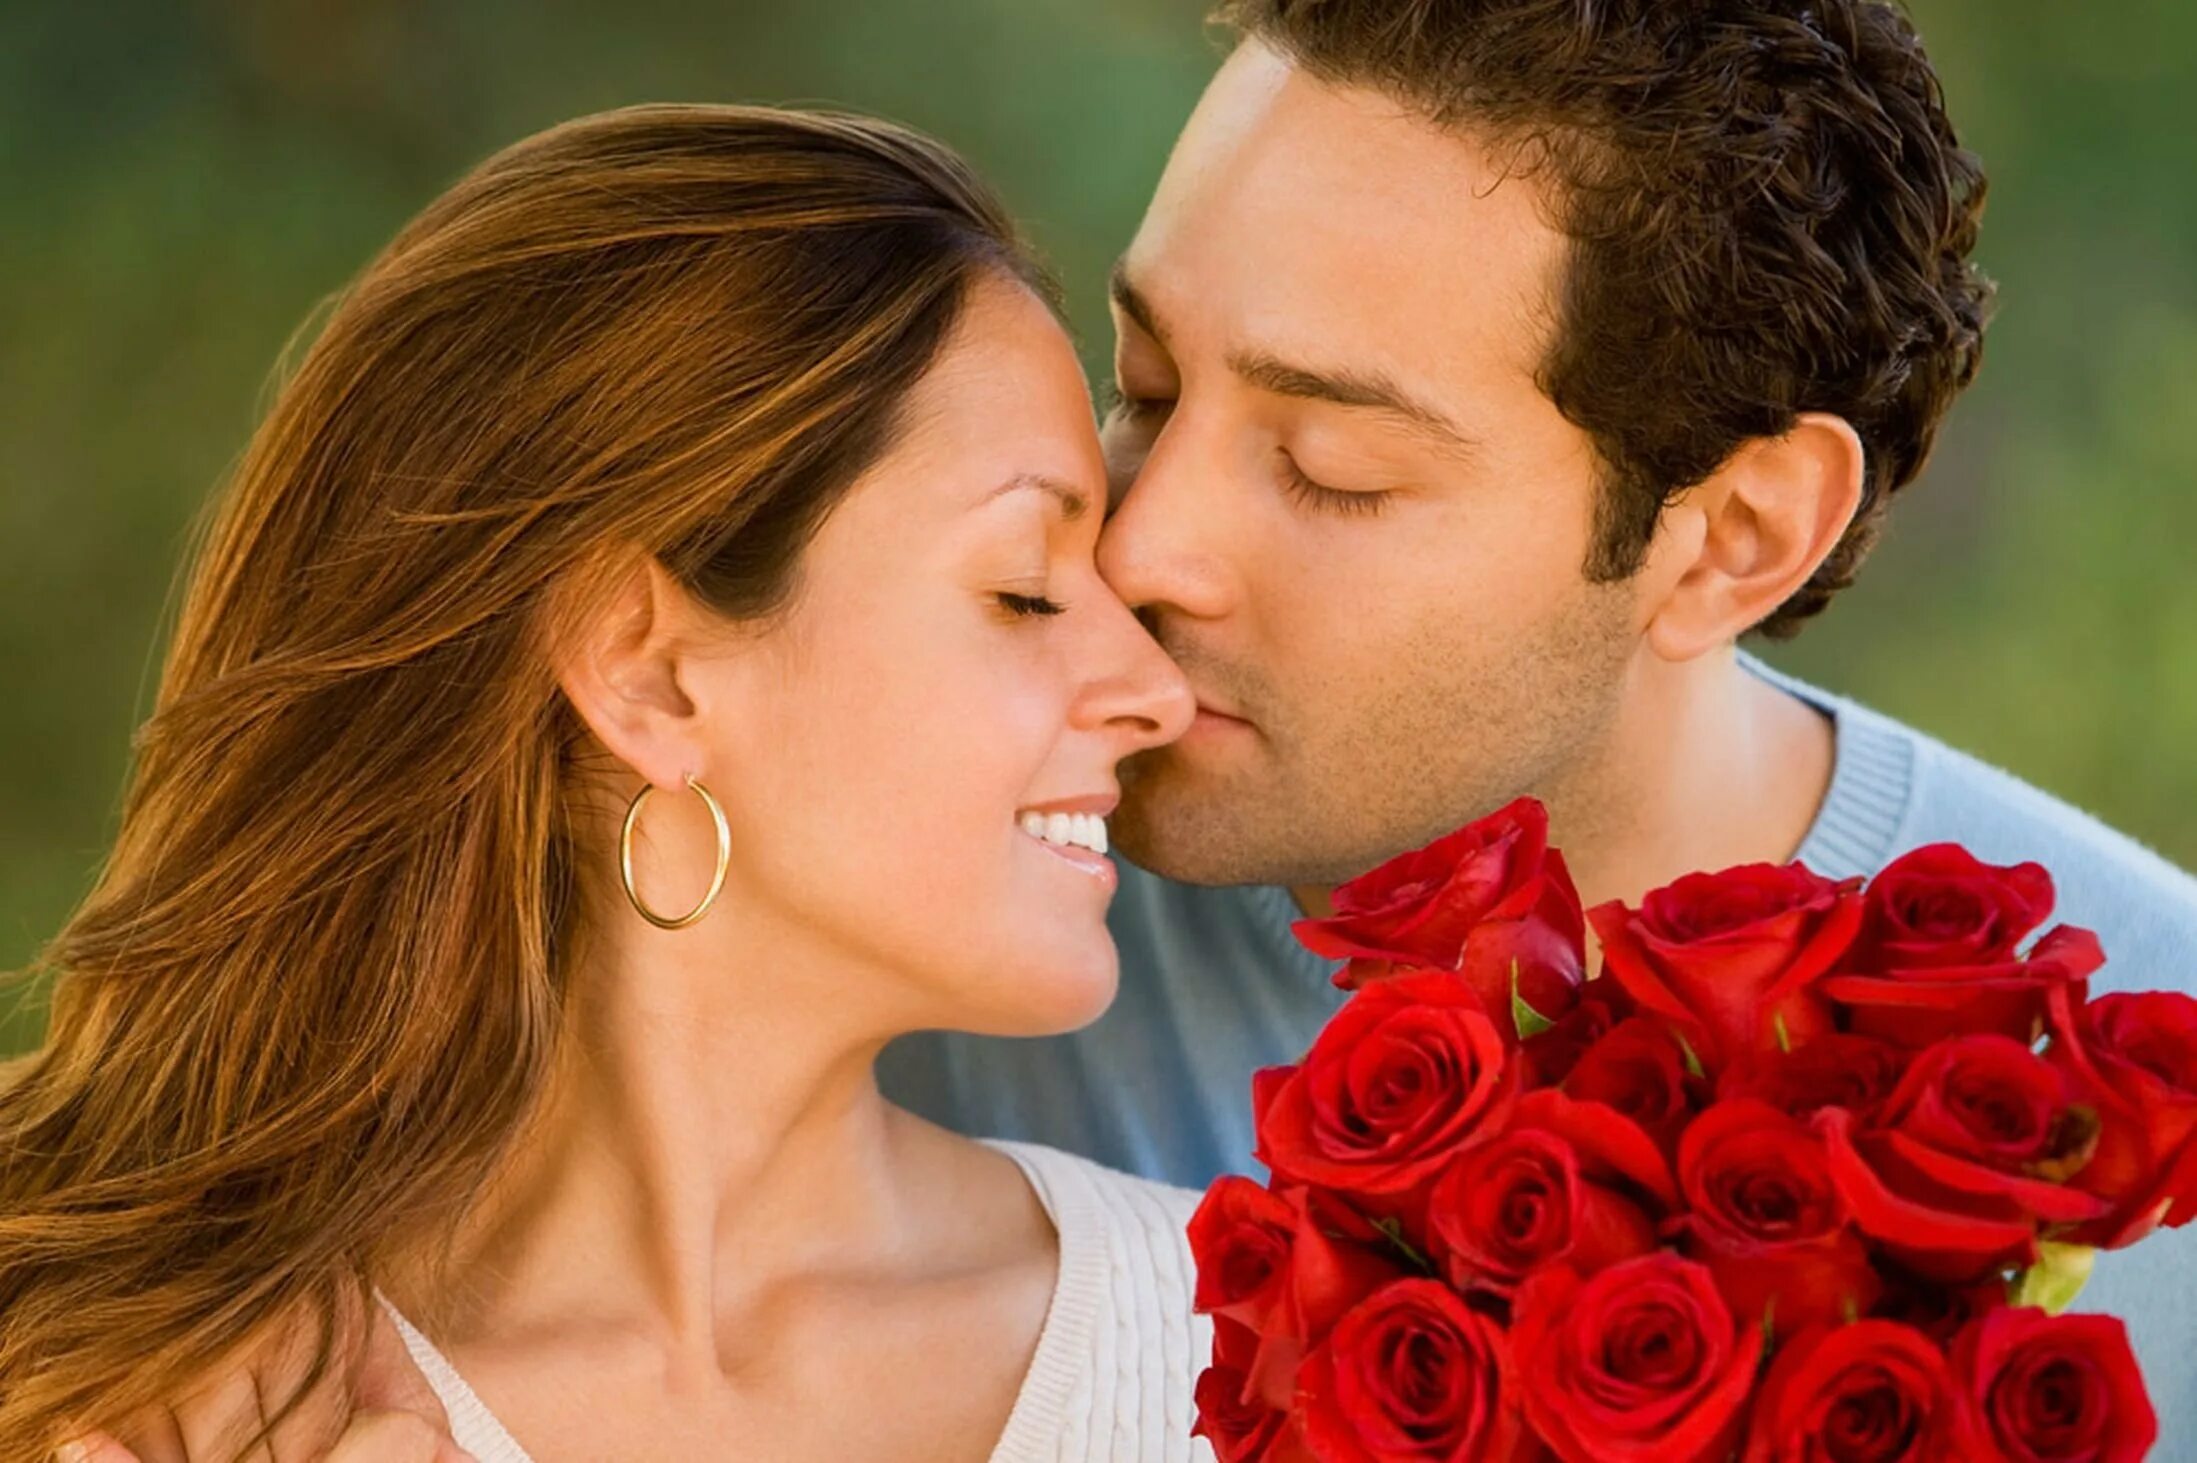 Мужчина романтик. Мужчина дарит цветы женщине. Влюбленный мужчина. Мужчина и женщина с цветами. Мужчина и женщина любовь.